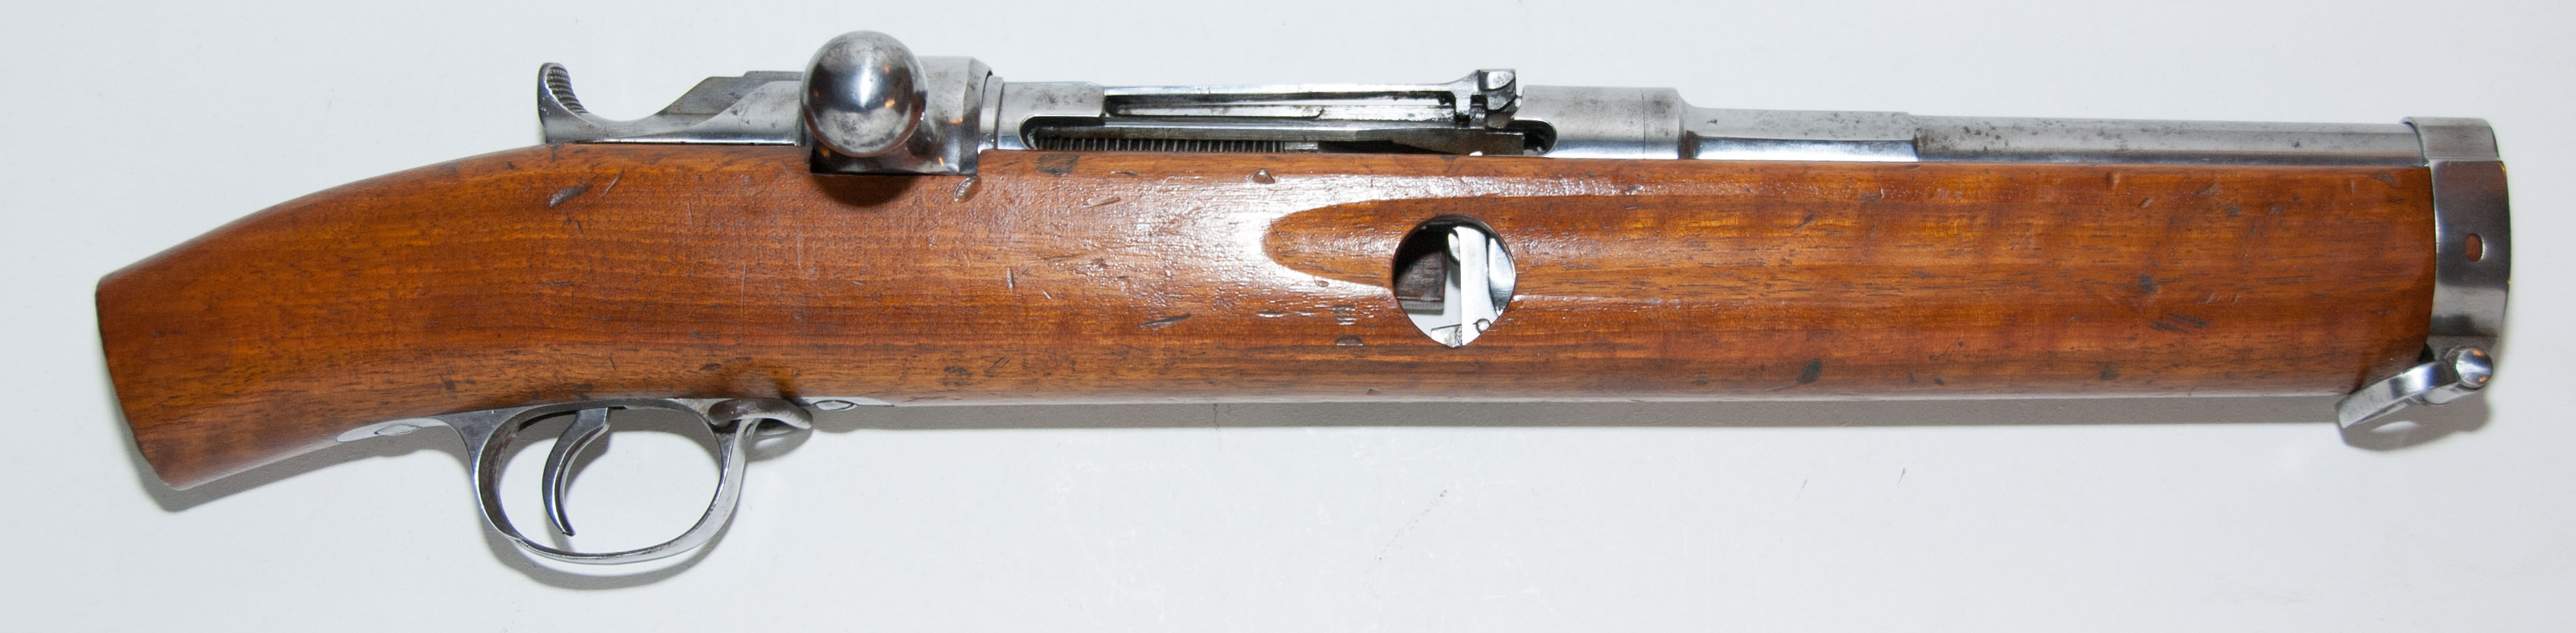 ./guns/rifle/bilder/Rifle-Kongsberg-Jarmann-M1887-12-1.jpg